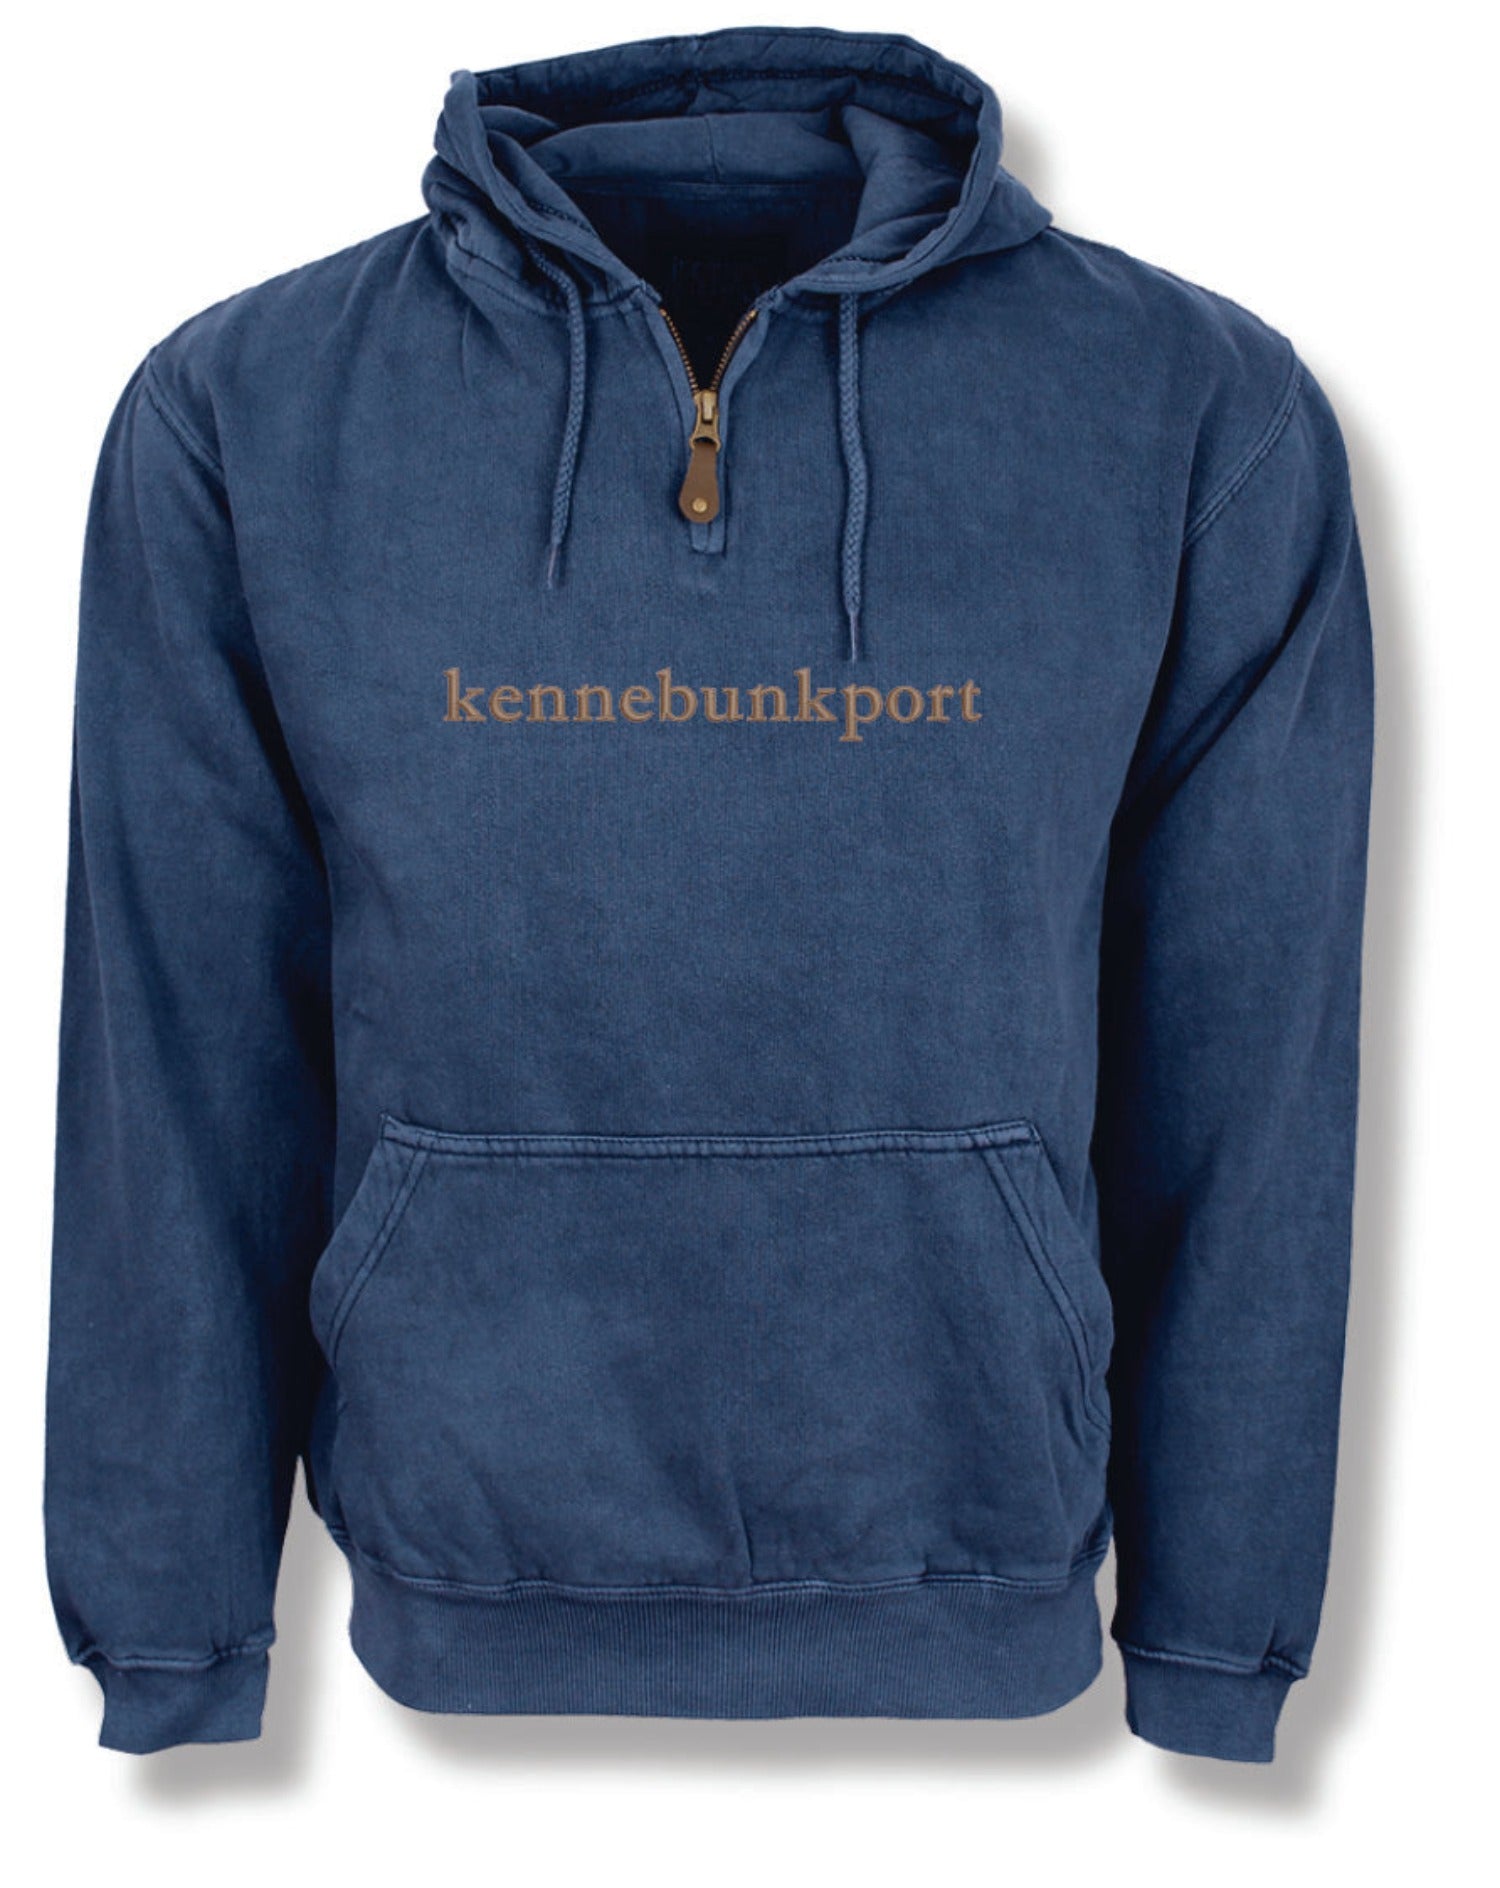 kennebunkport sweatshirts